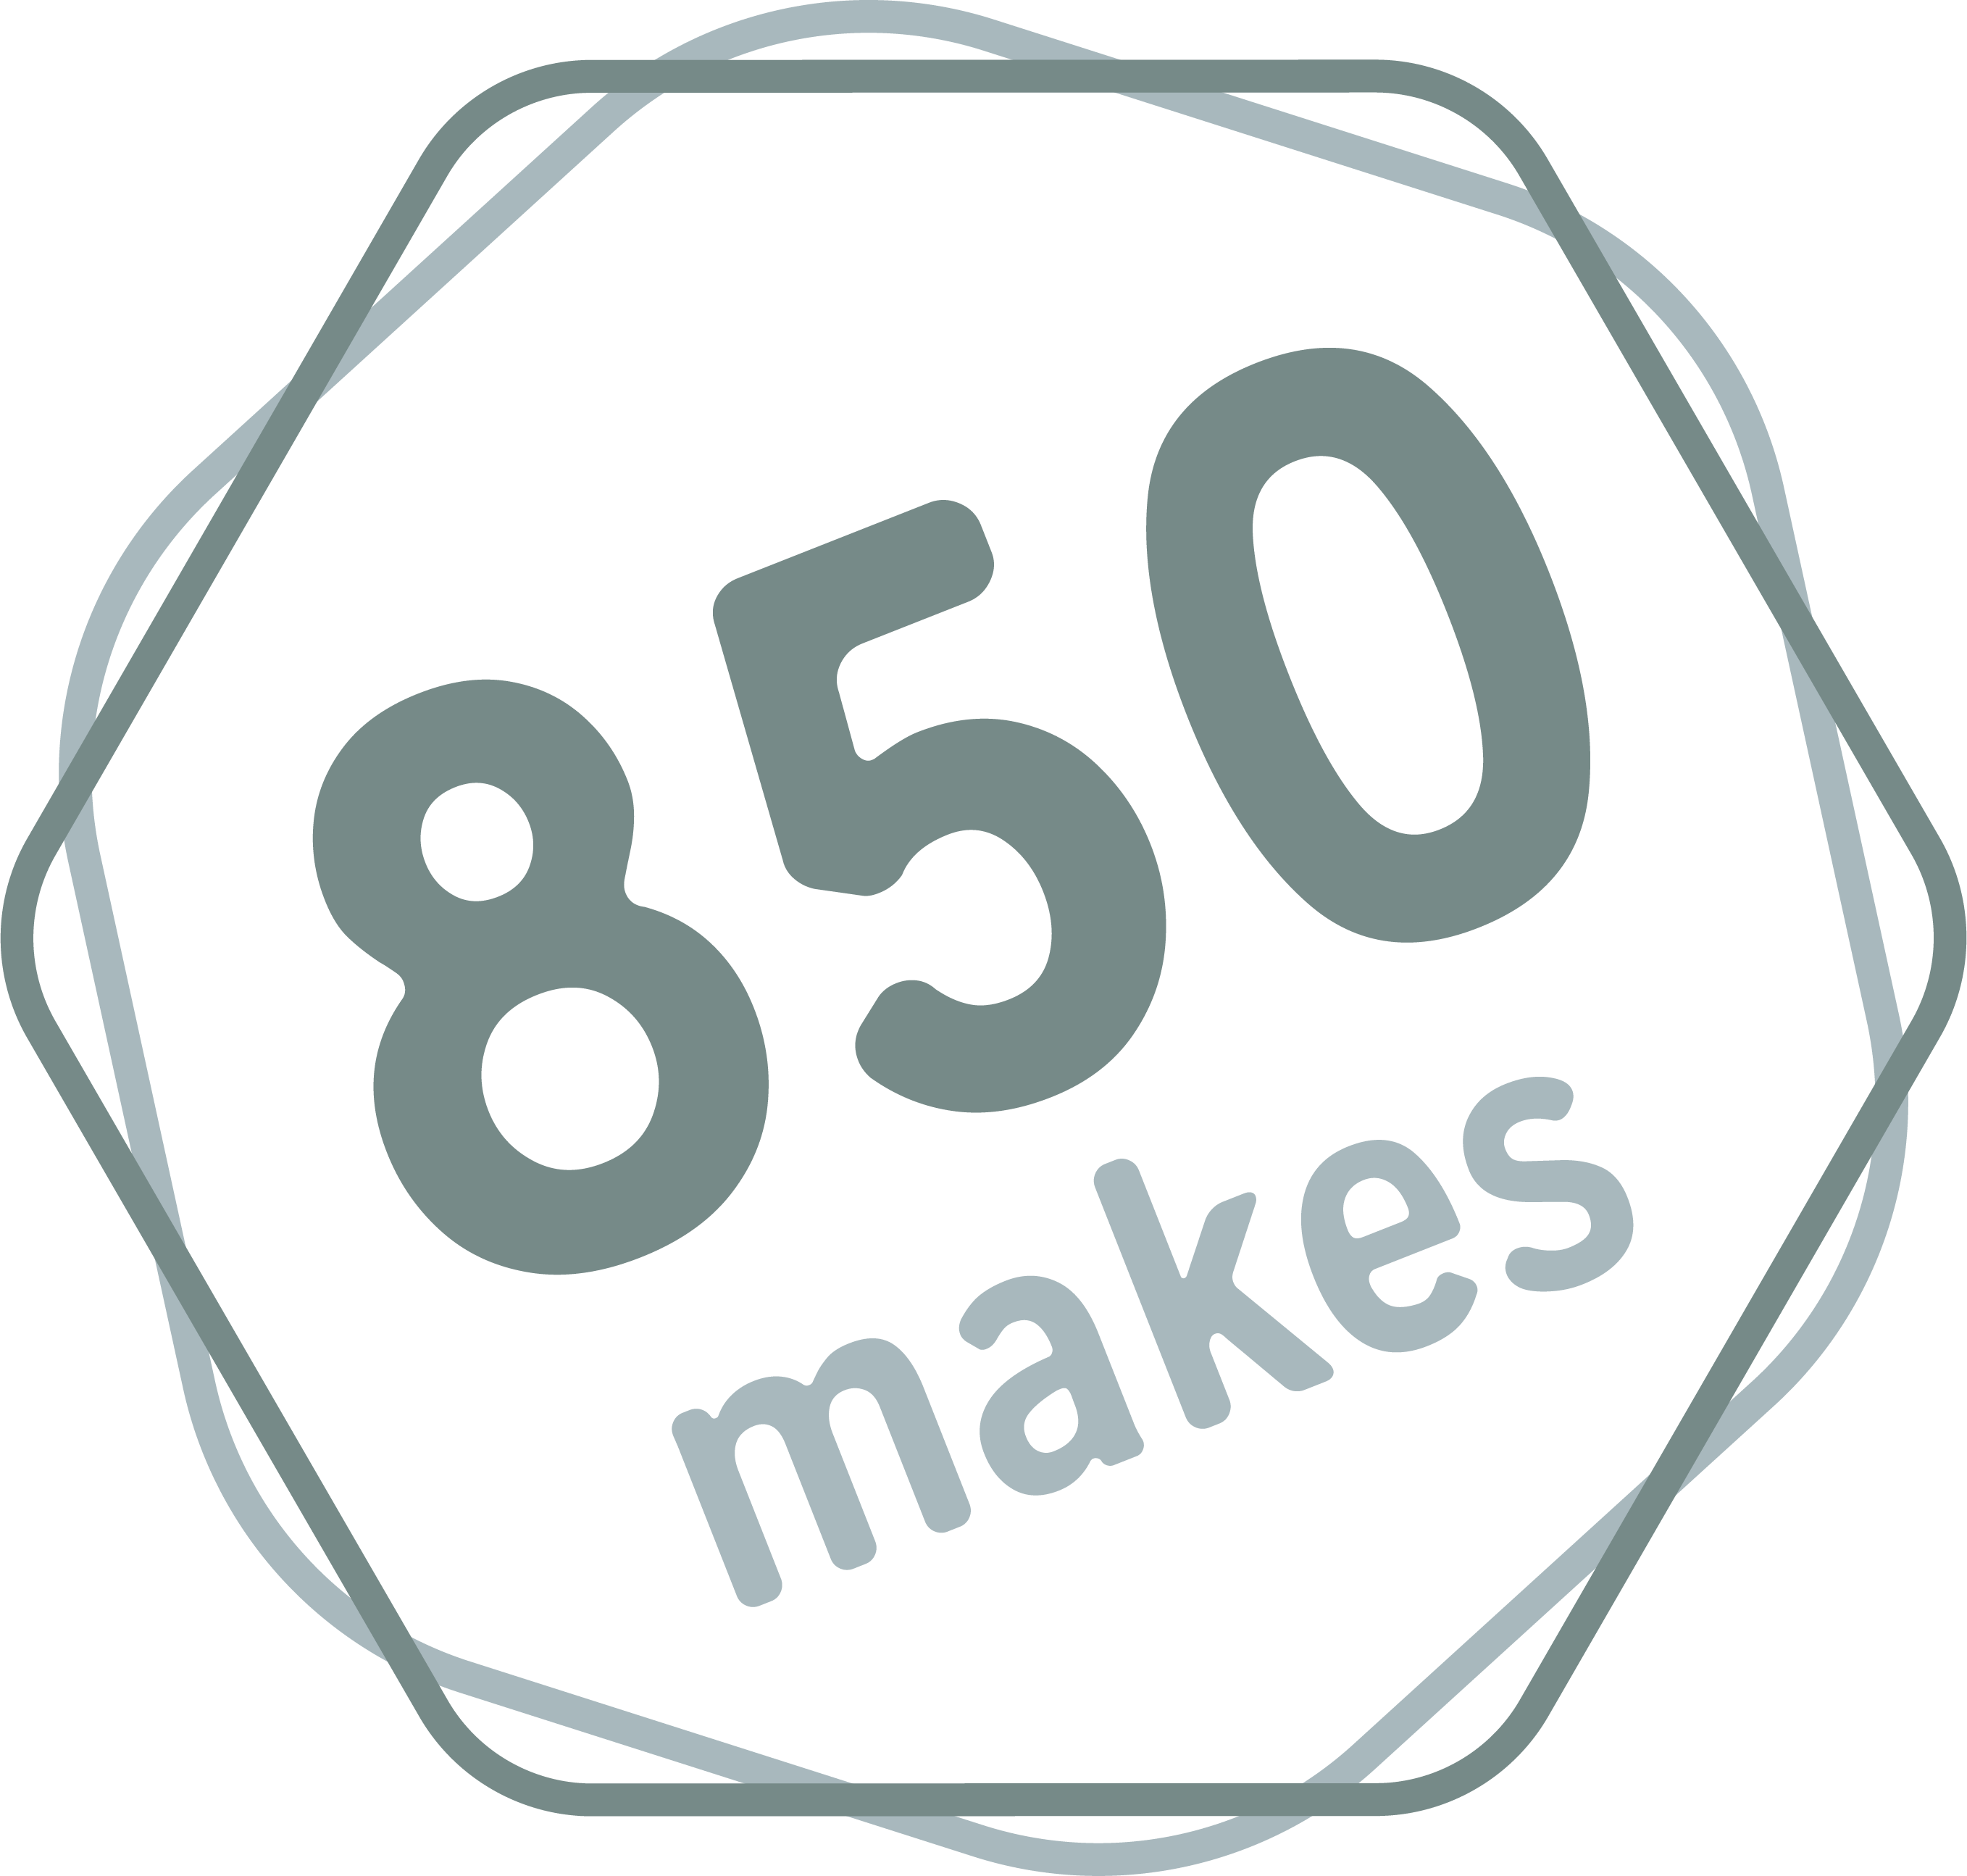 850 Makes